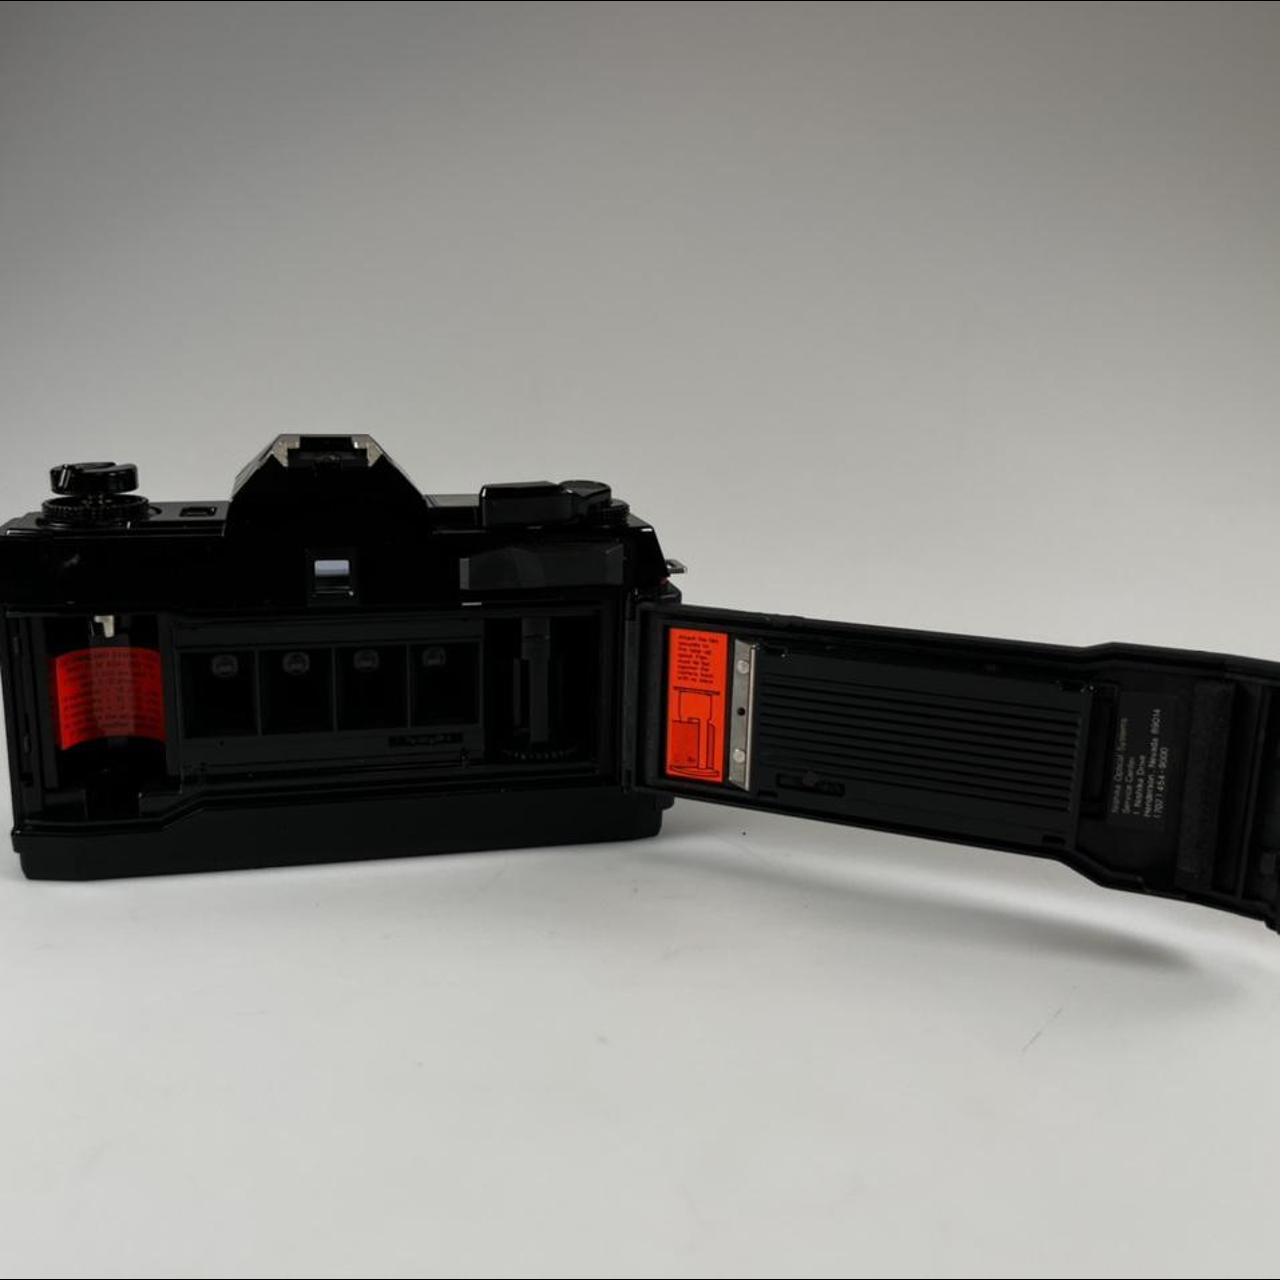 Product Image 3 - Nishika N8000 3D Film Camera

Mint